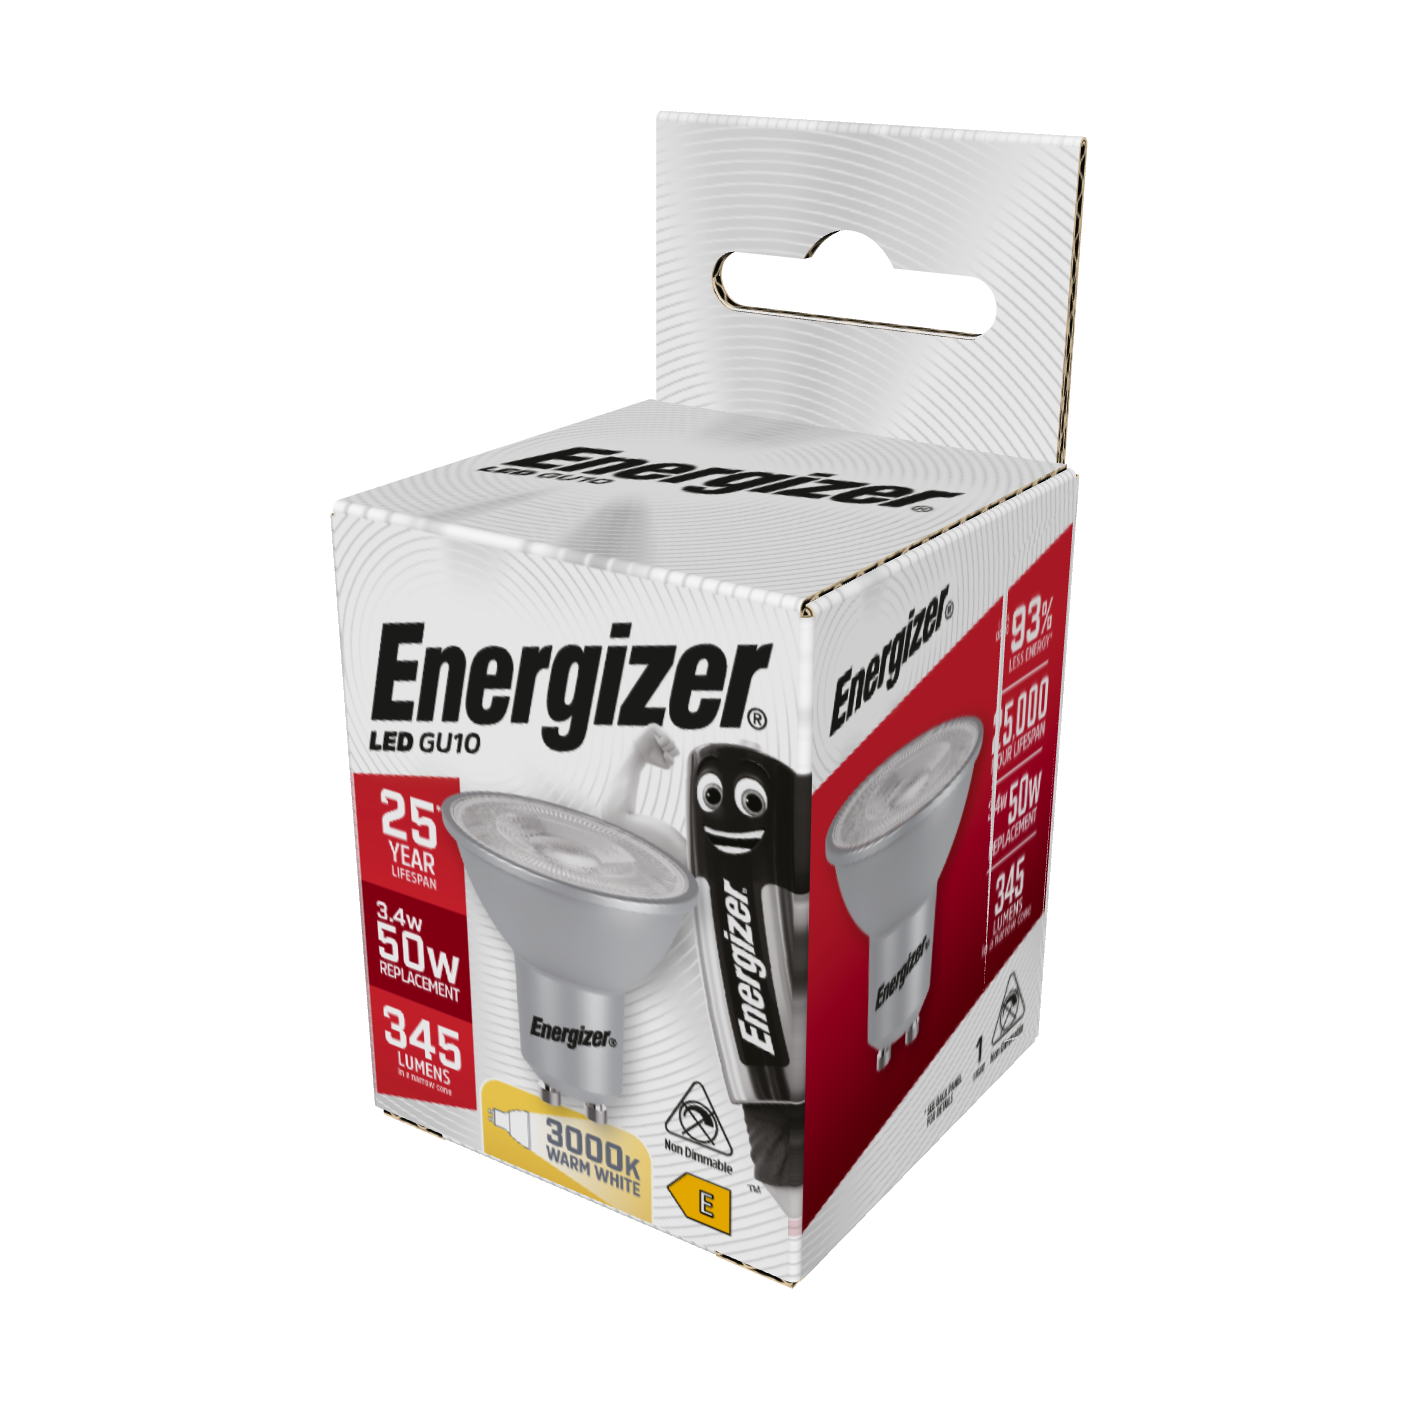 Energizer LED GU10 345lm 3.4W 3,000K (Warm White), Box of 1